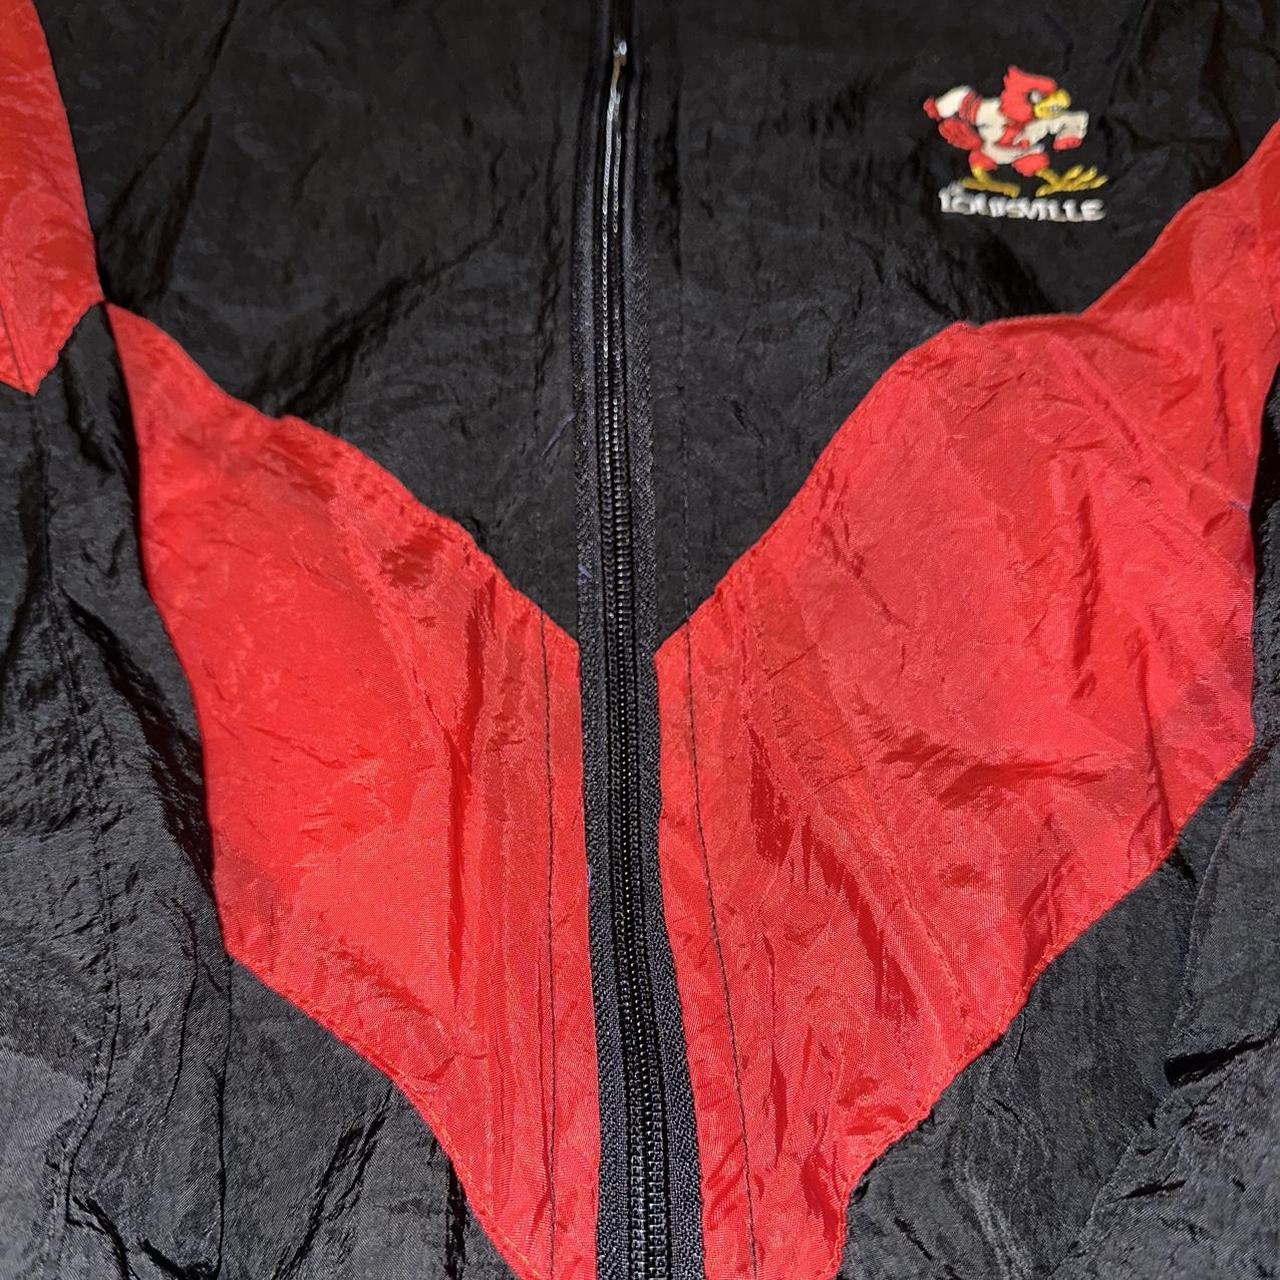 Louisville Cardinals Jacket ZIPPER HAS MISSING - Depop